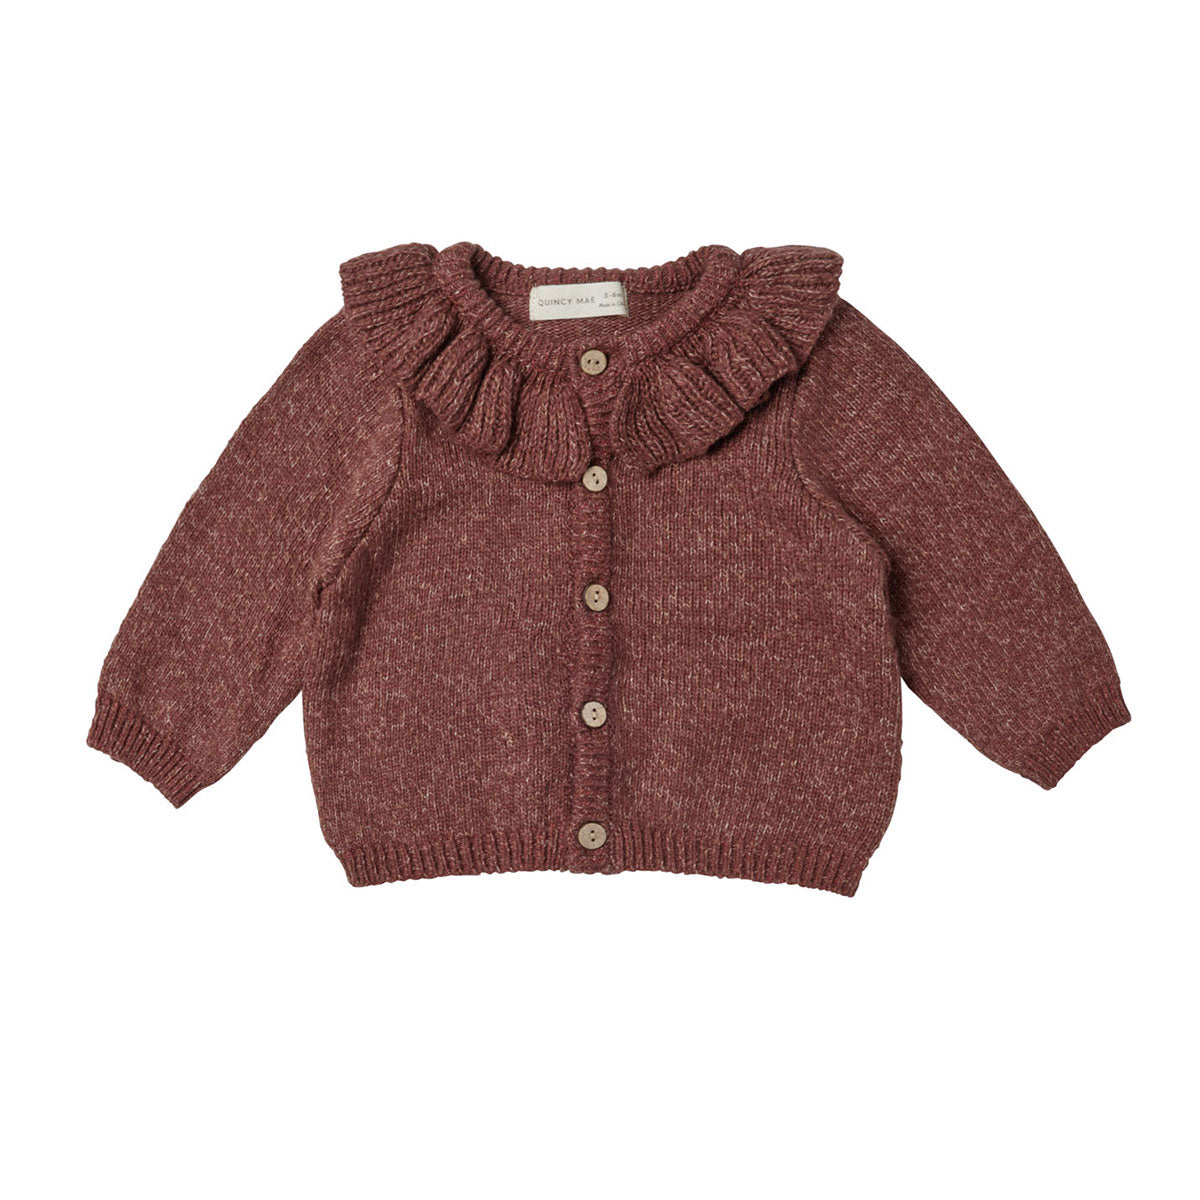 Quincy Mae Ruffle Collar Cardigan Sweater - Plum Heather